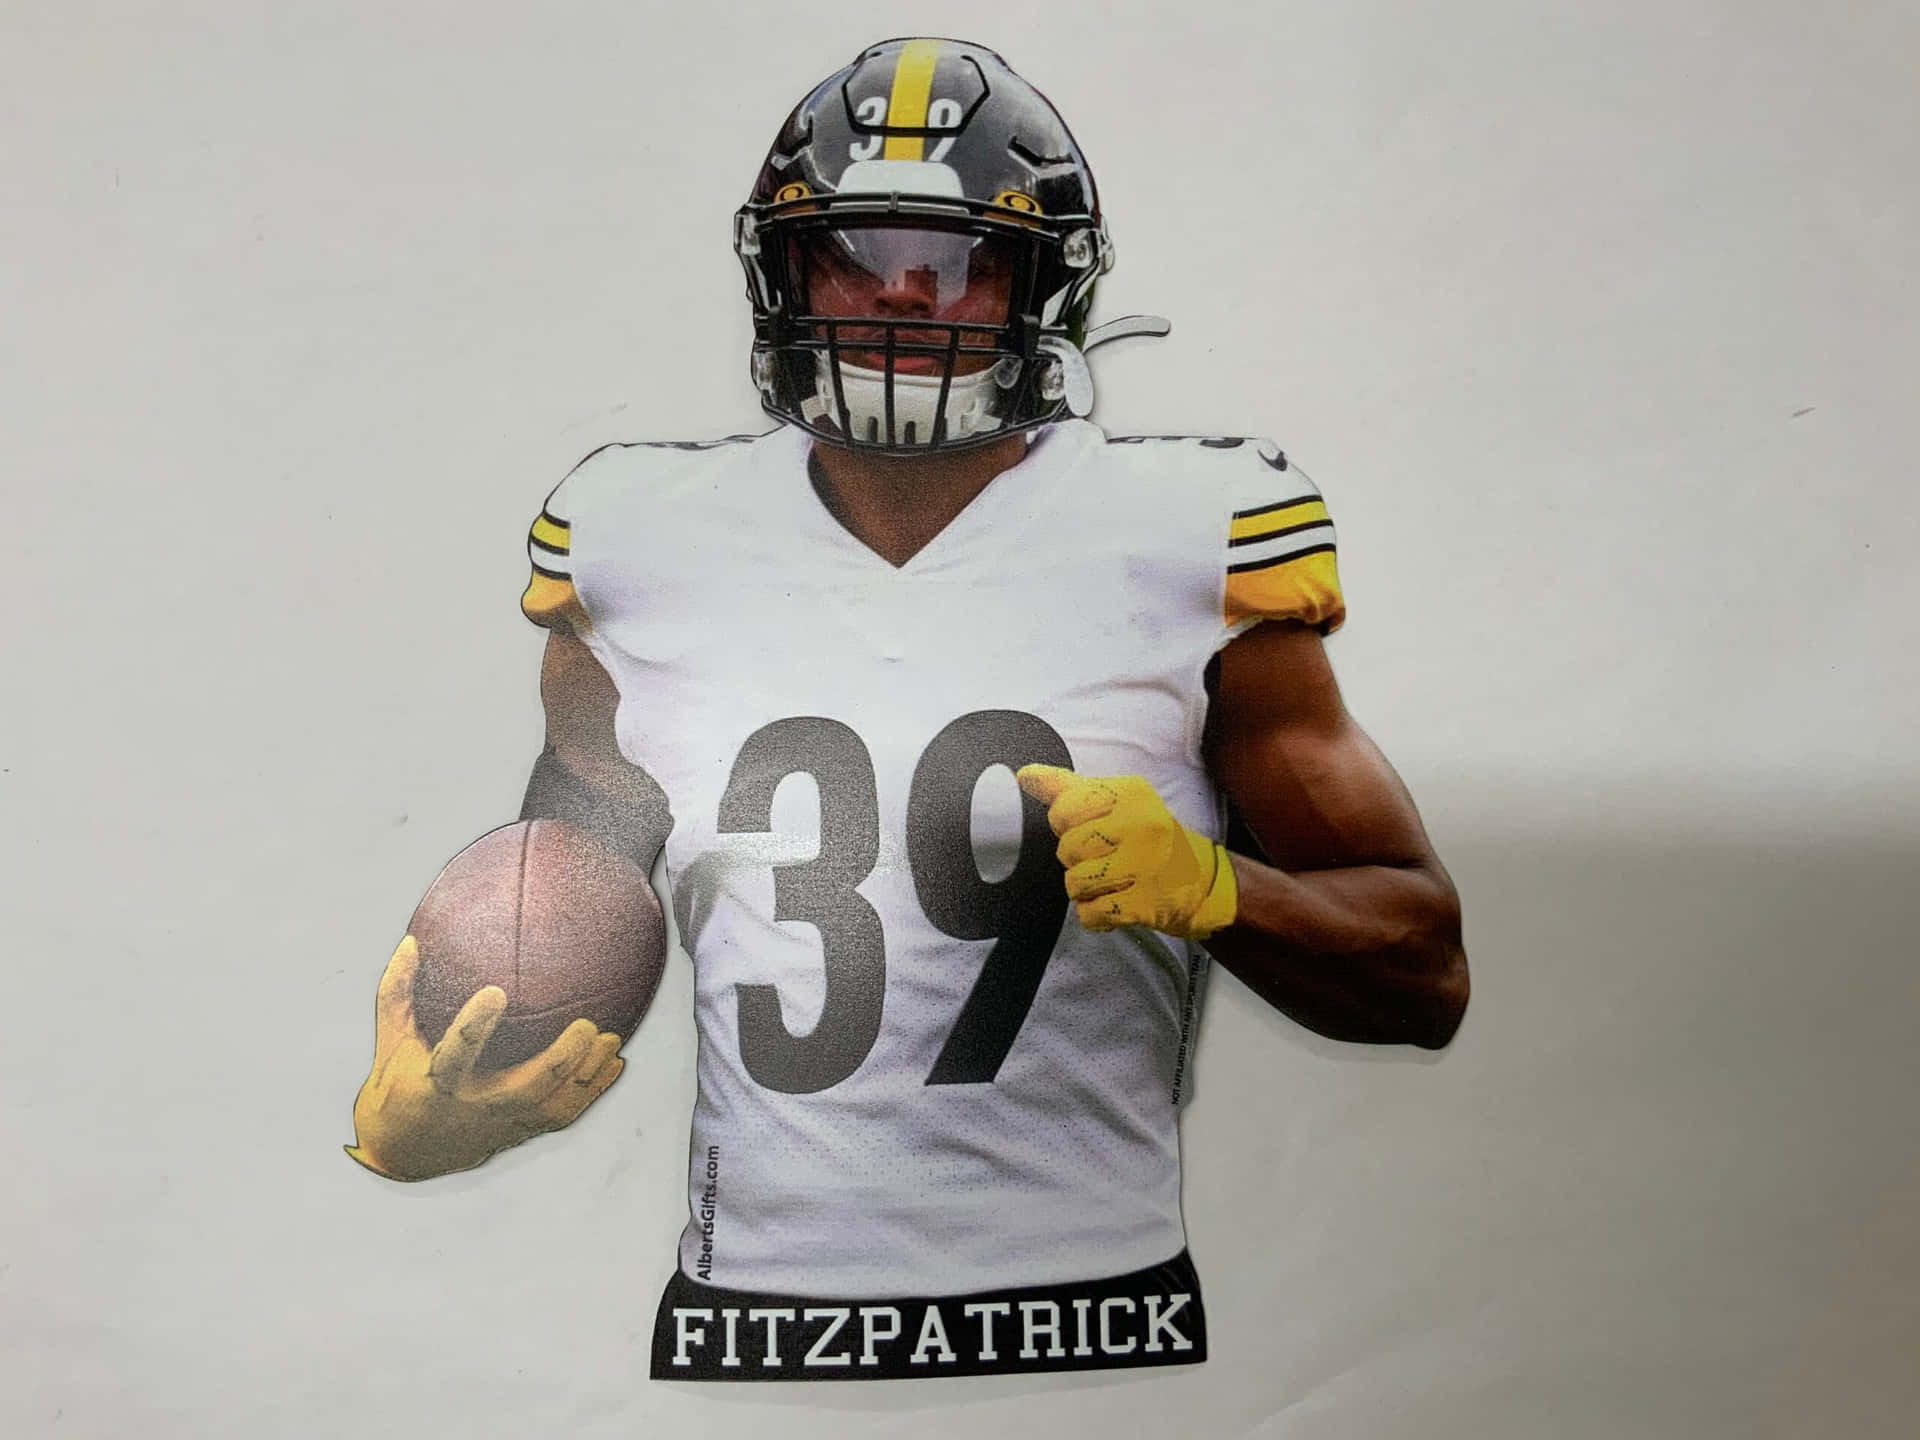 Minkahfitzpatrick Pittsburgh Steelers Säkerhetsspeler Redigerad: Minkah Fitzpatrick Pittsburgh Steelers Safety Player Redigerad. Wallpaper